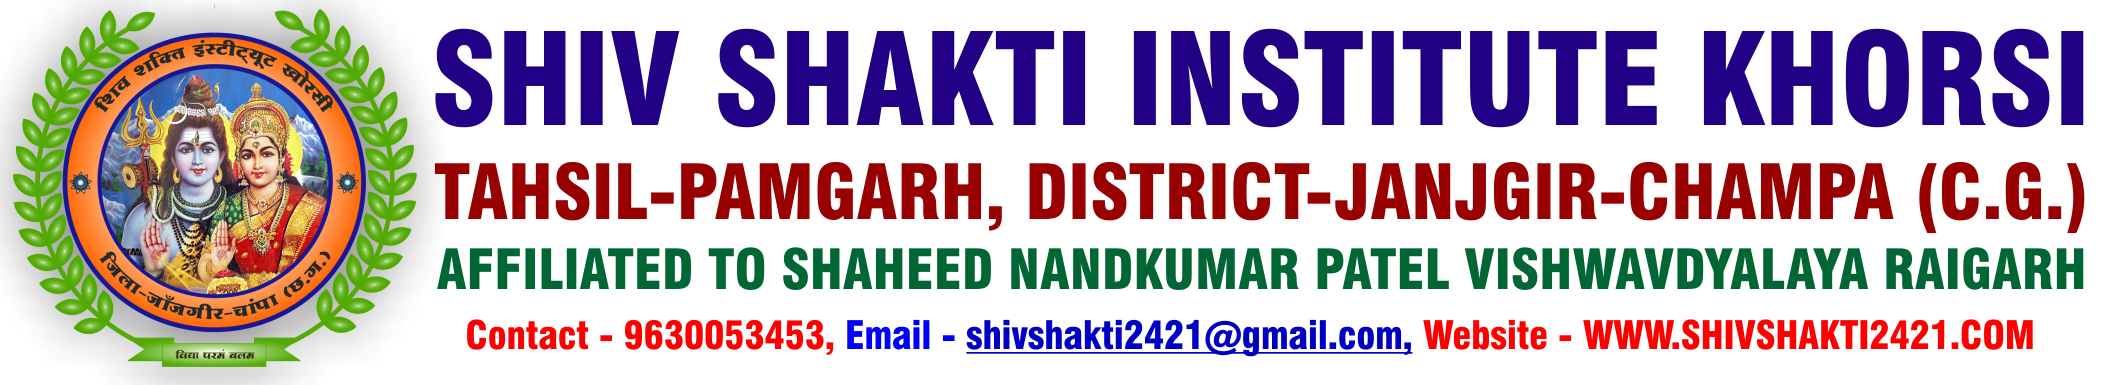 Shiv Shakti Institute